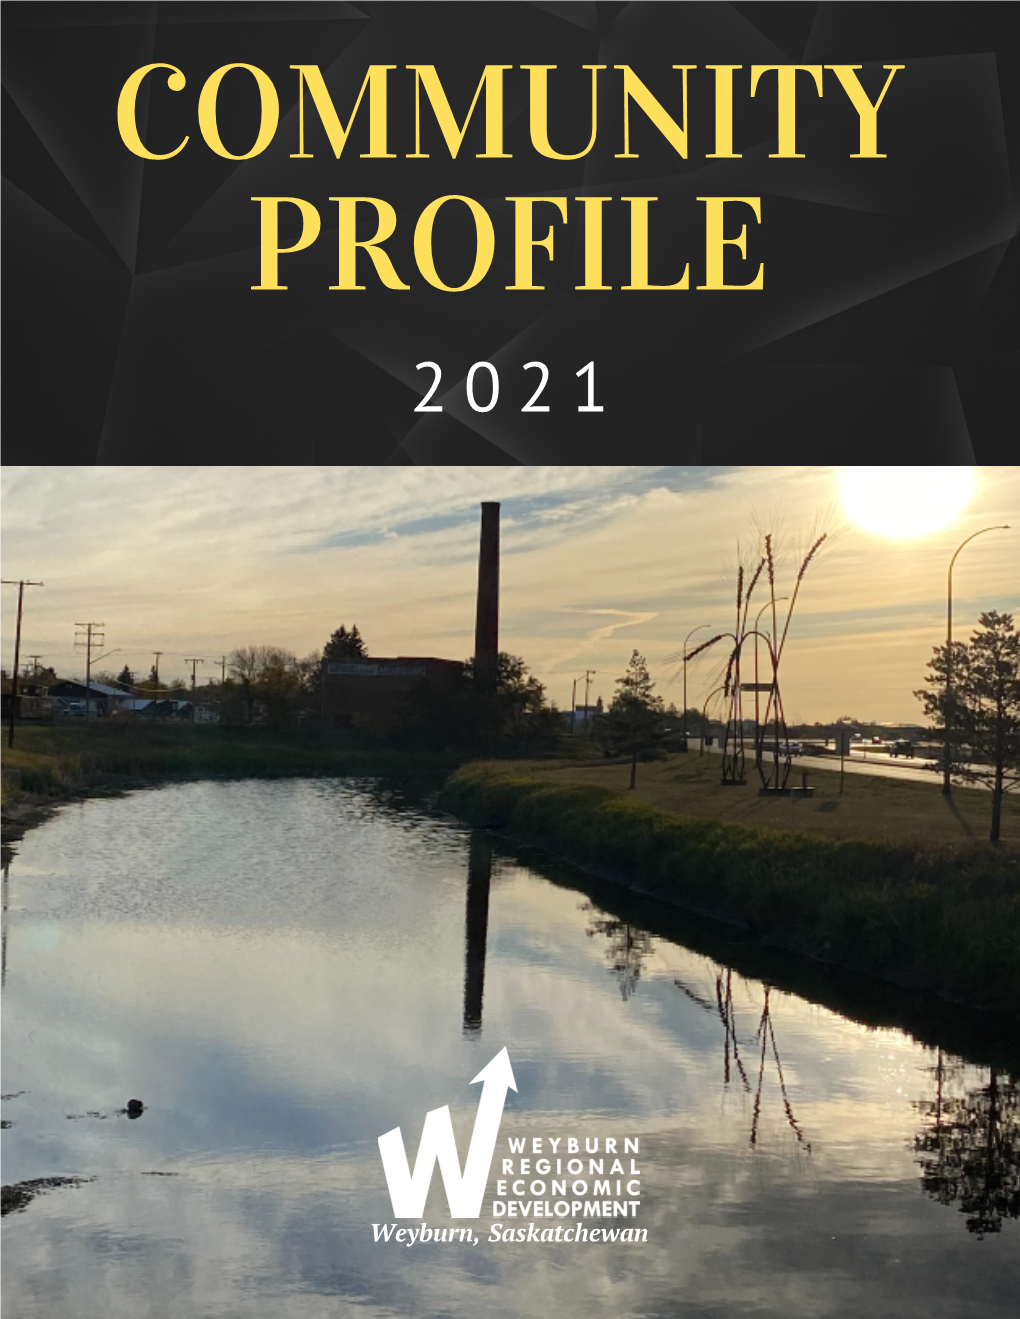 Weyburn, Saskatchewan 2021 COMMUNITY PROFILE